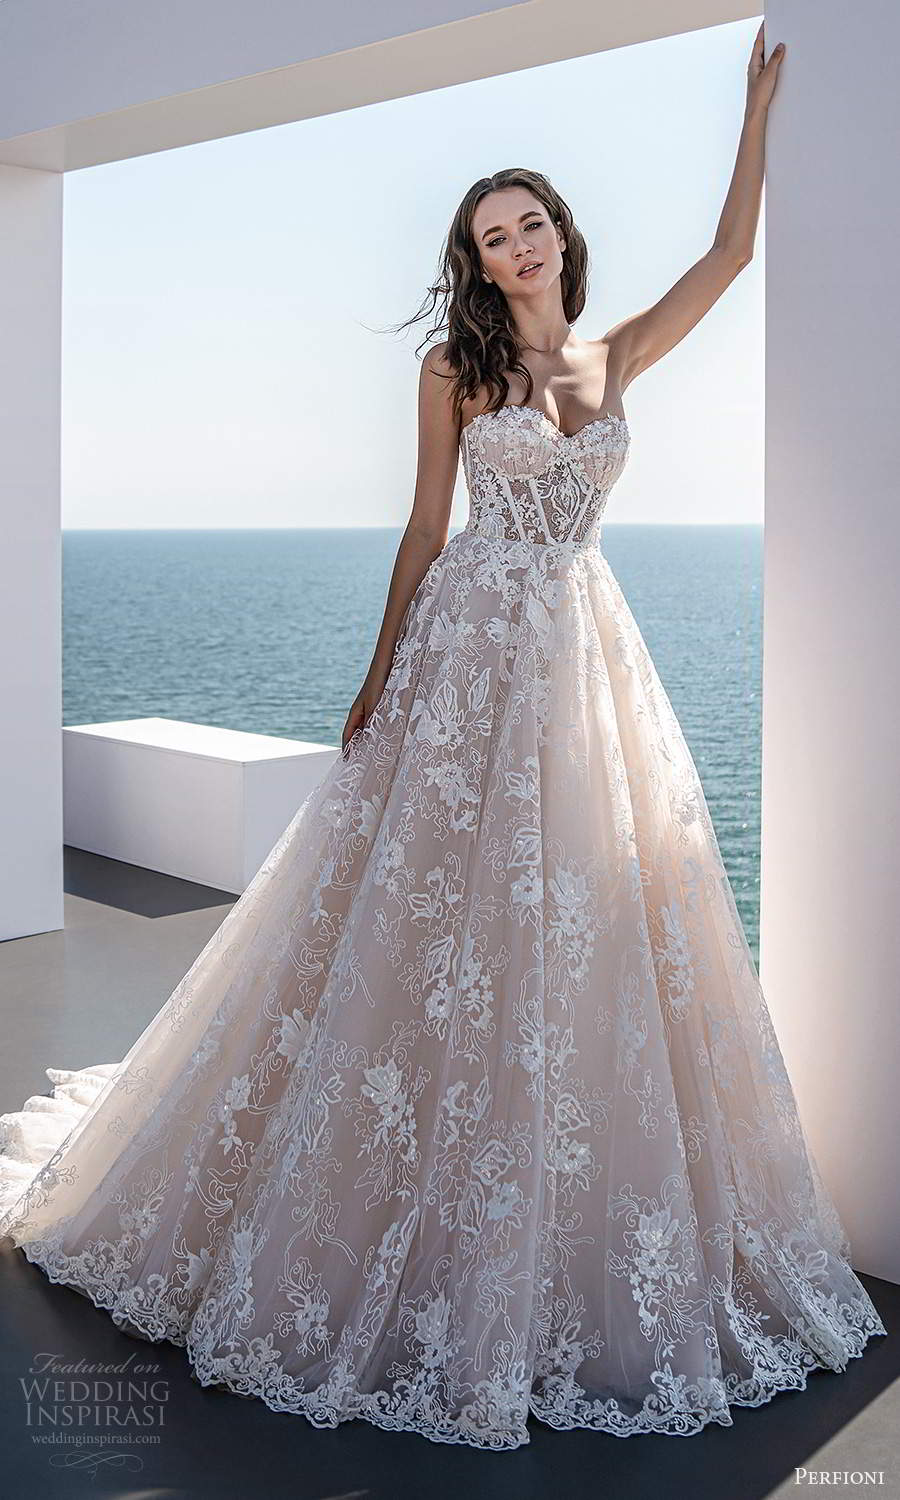 perfioni 2021 bridal strapless sweetheart neckline fully embellished a line ball gown wedding dress chapel train (16) mv